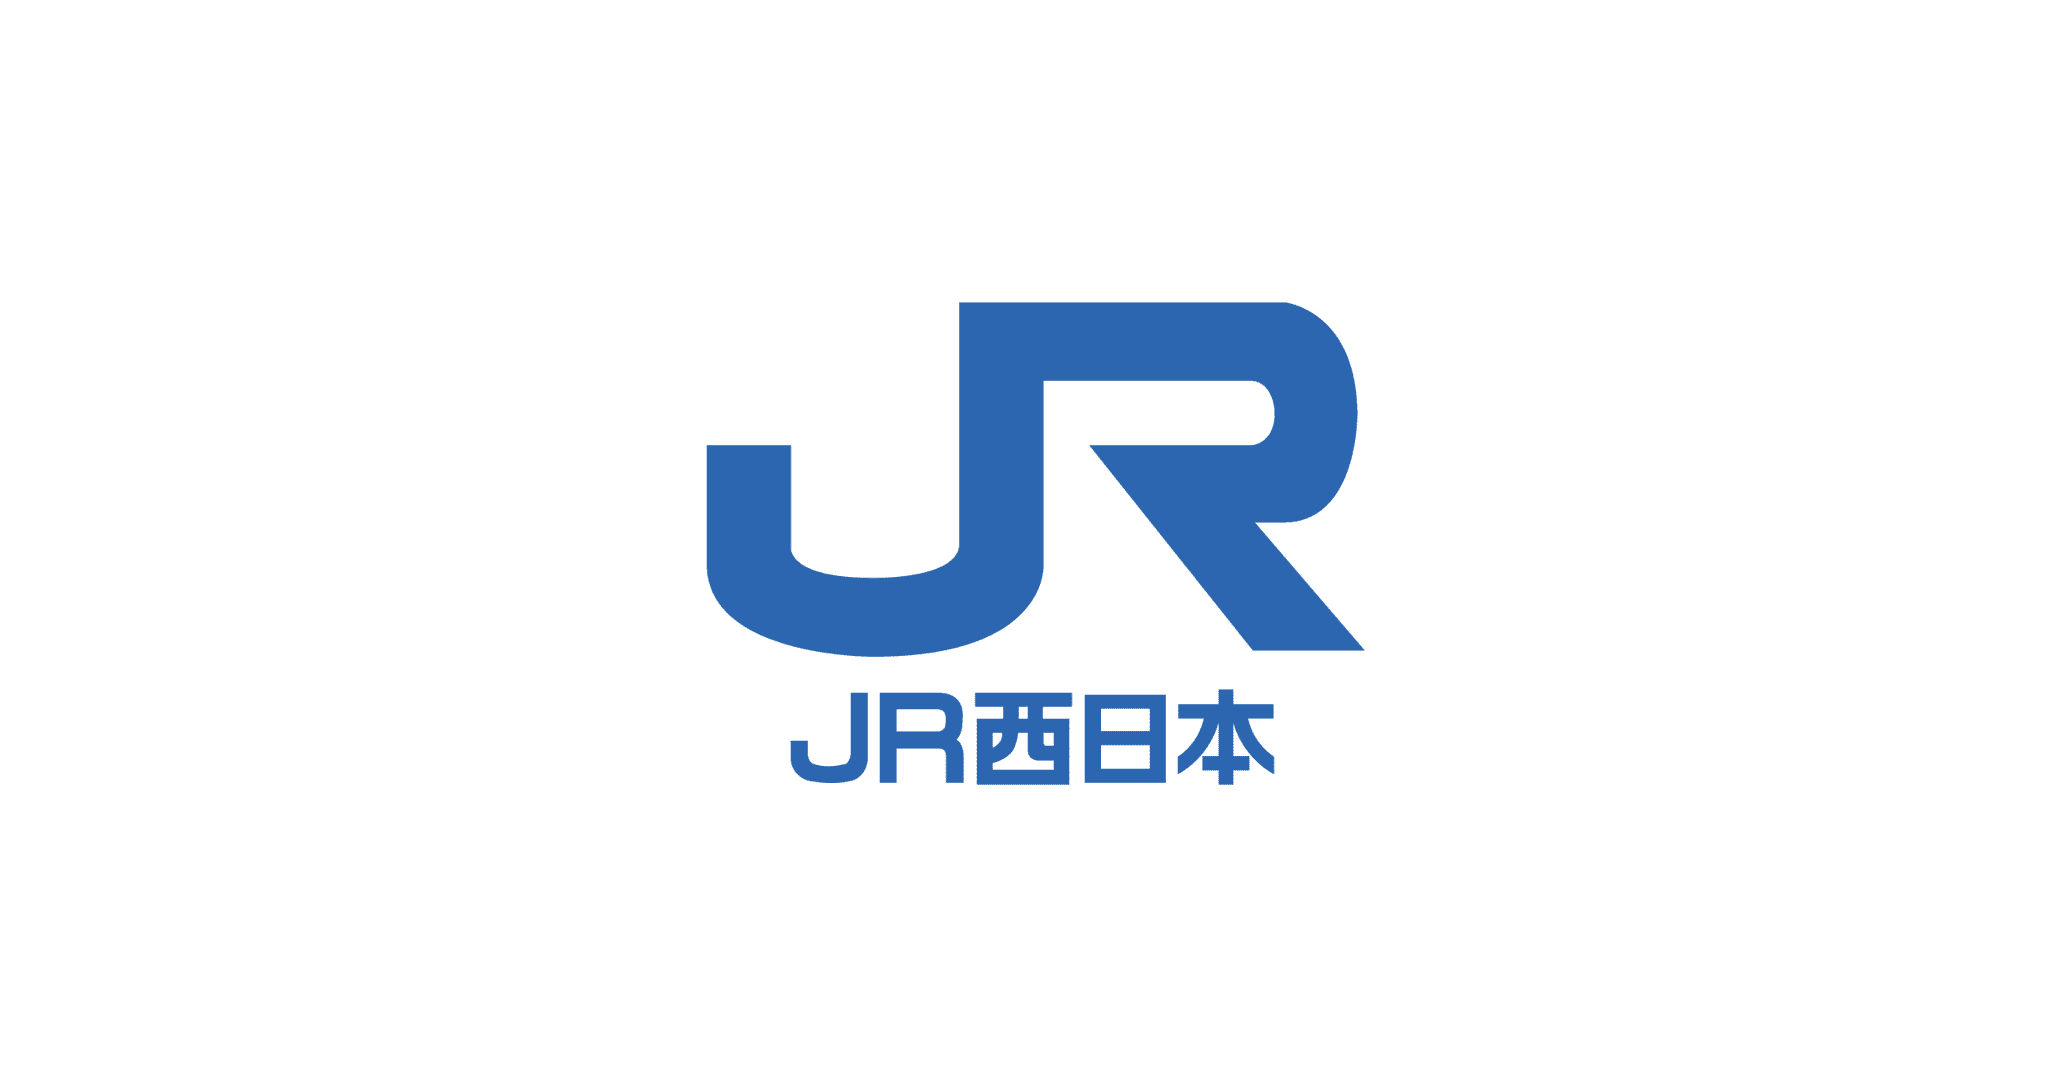 JR西日本の就職難易度は高い？就職偏差値や採用大学をもとに解説